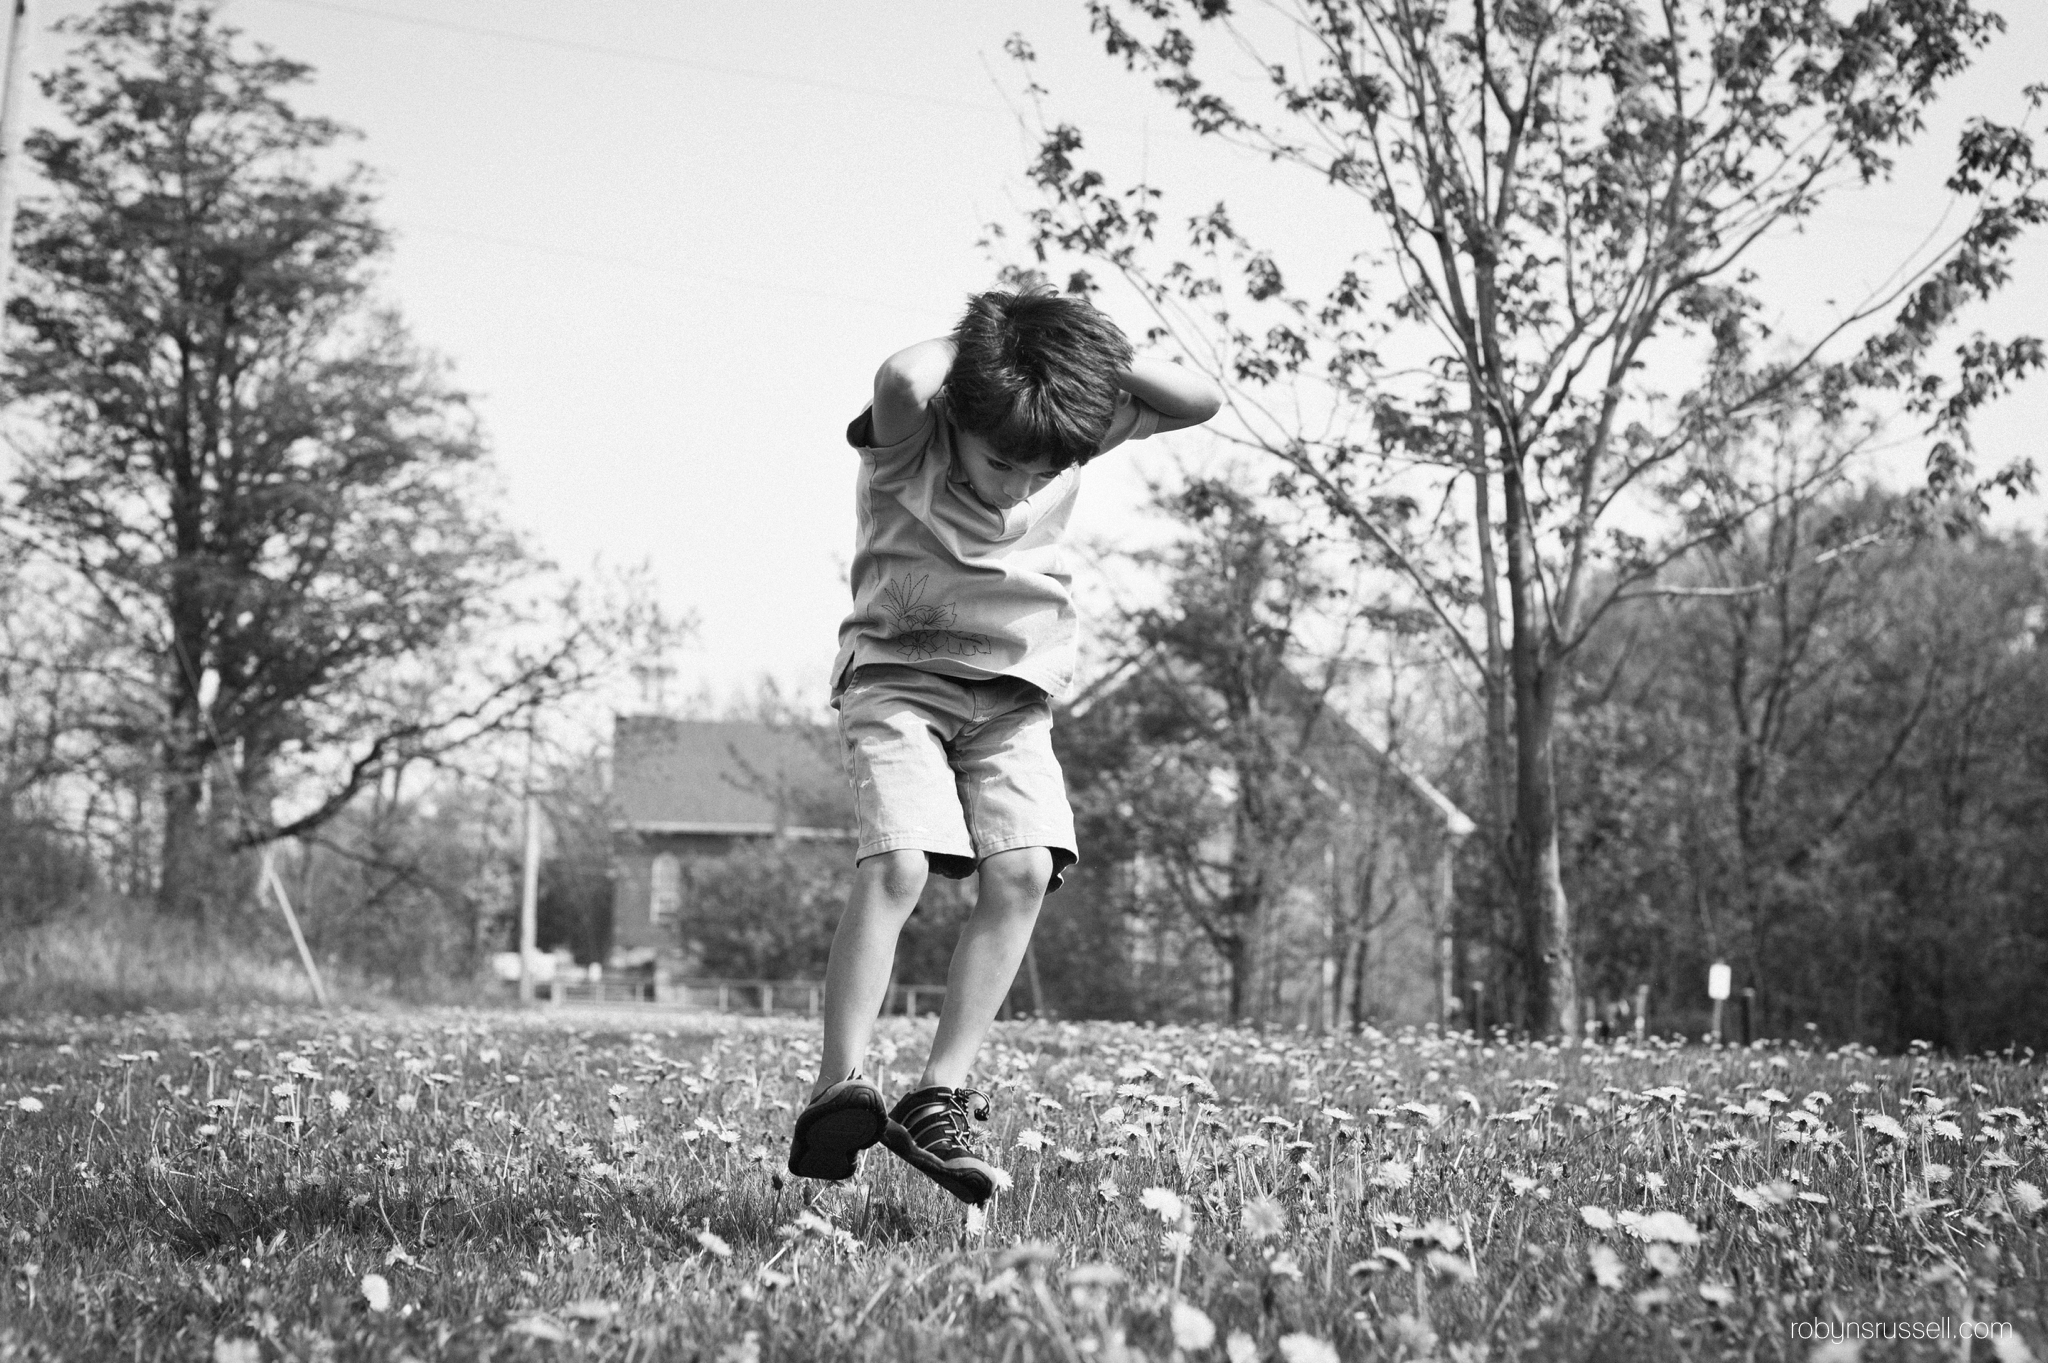 11-jump-boy-style-black-and-white.jpg